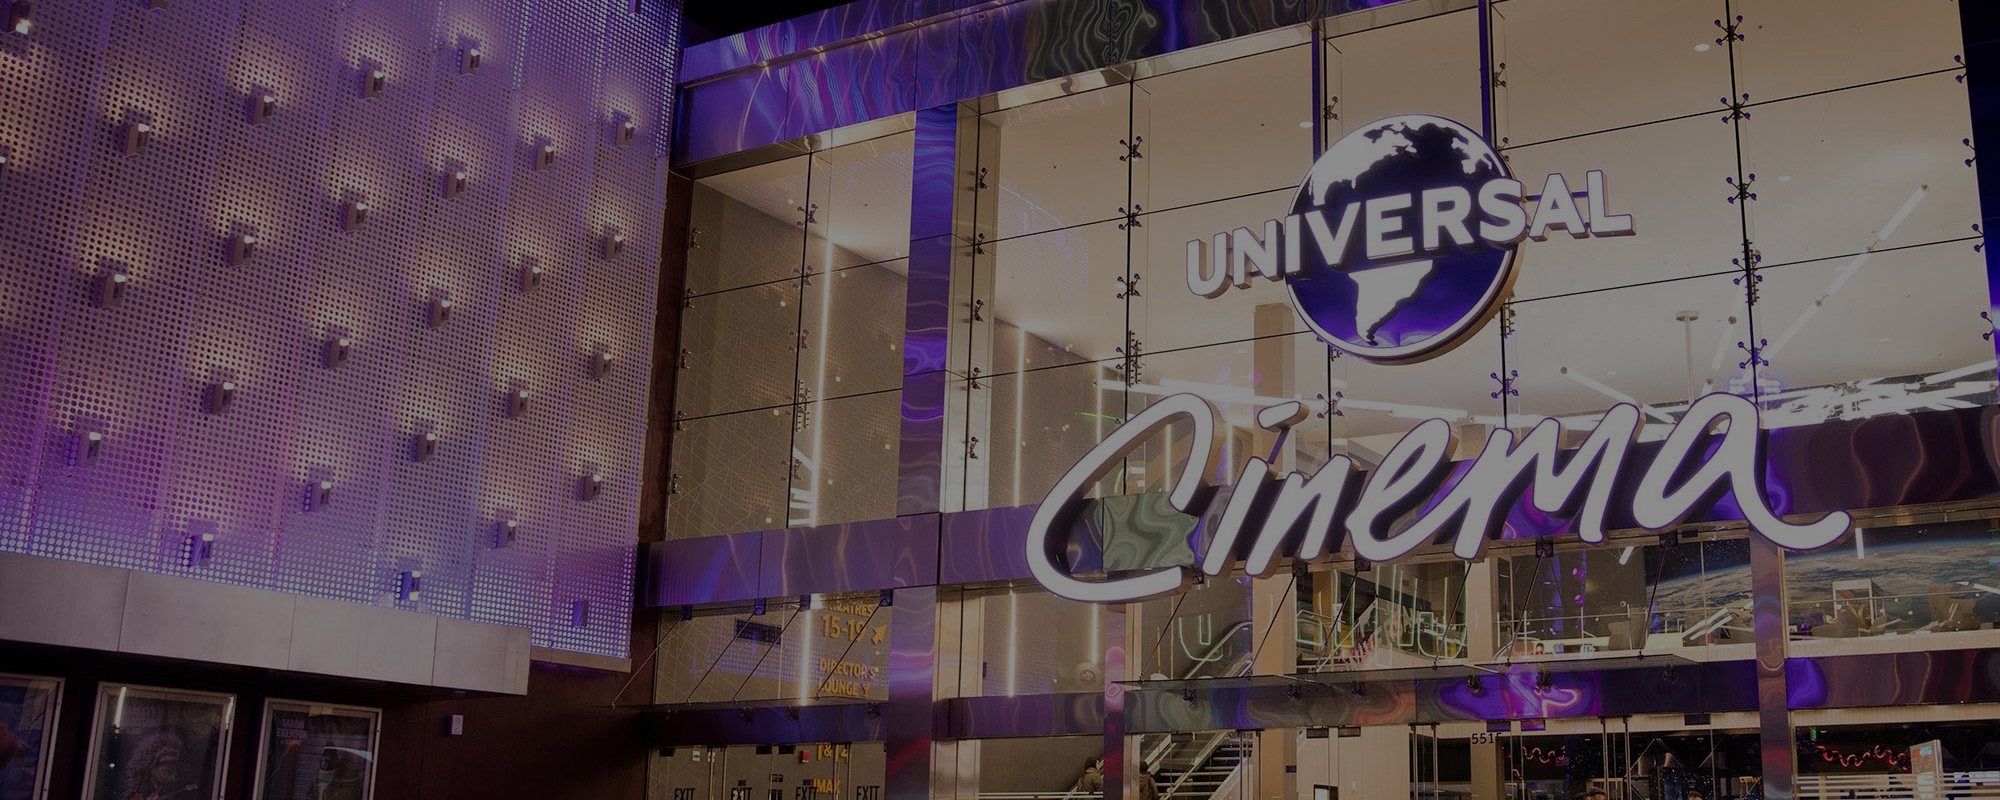 universal studios amc theater